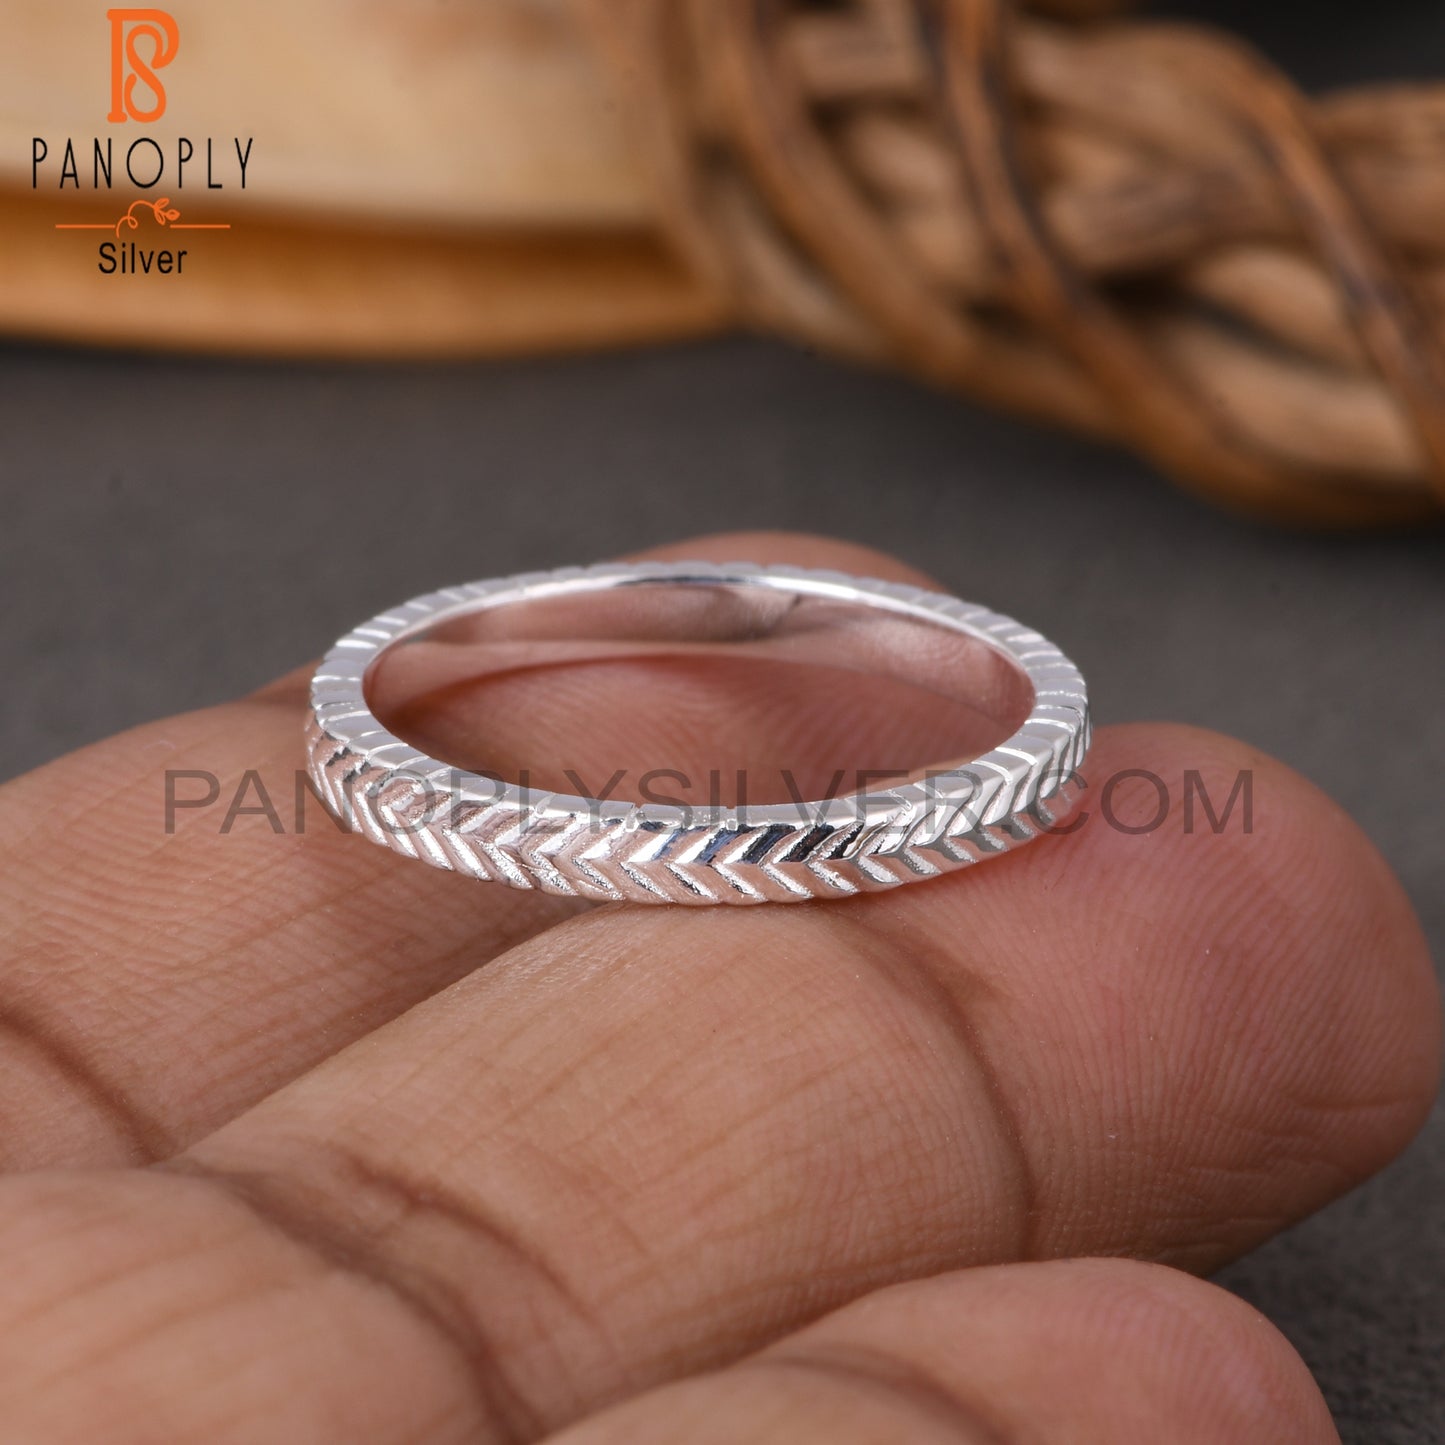 Designer 925 Sterling Silver Simple Ring